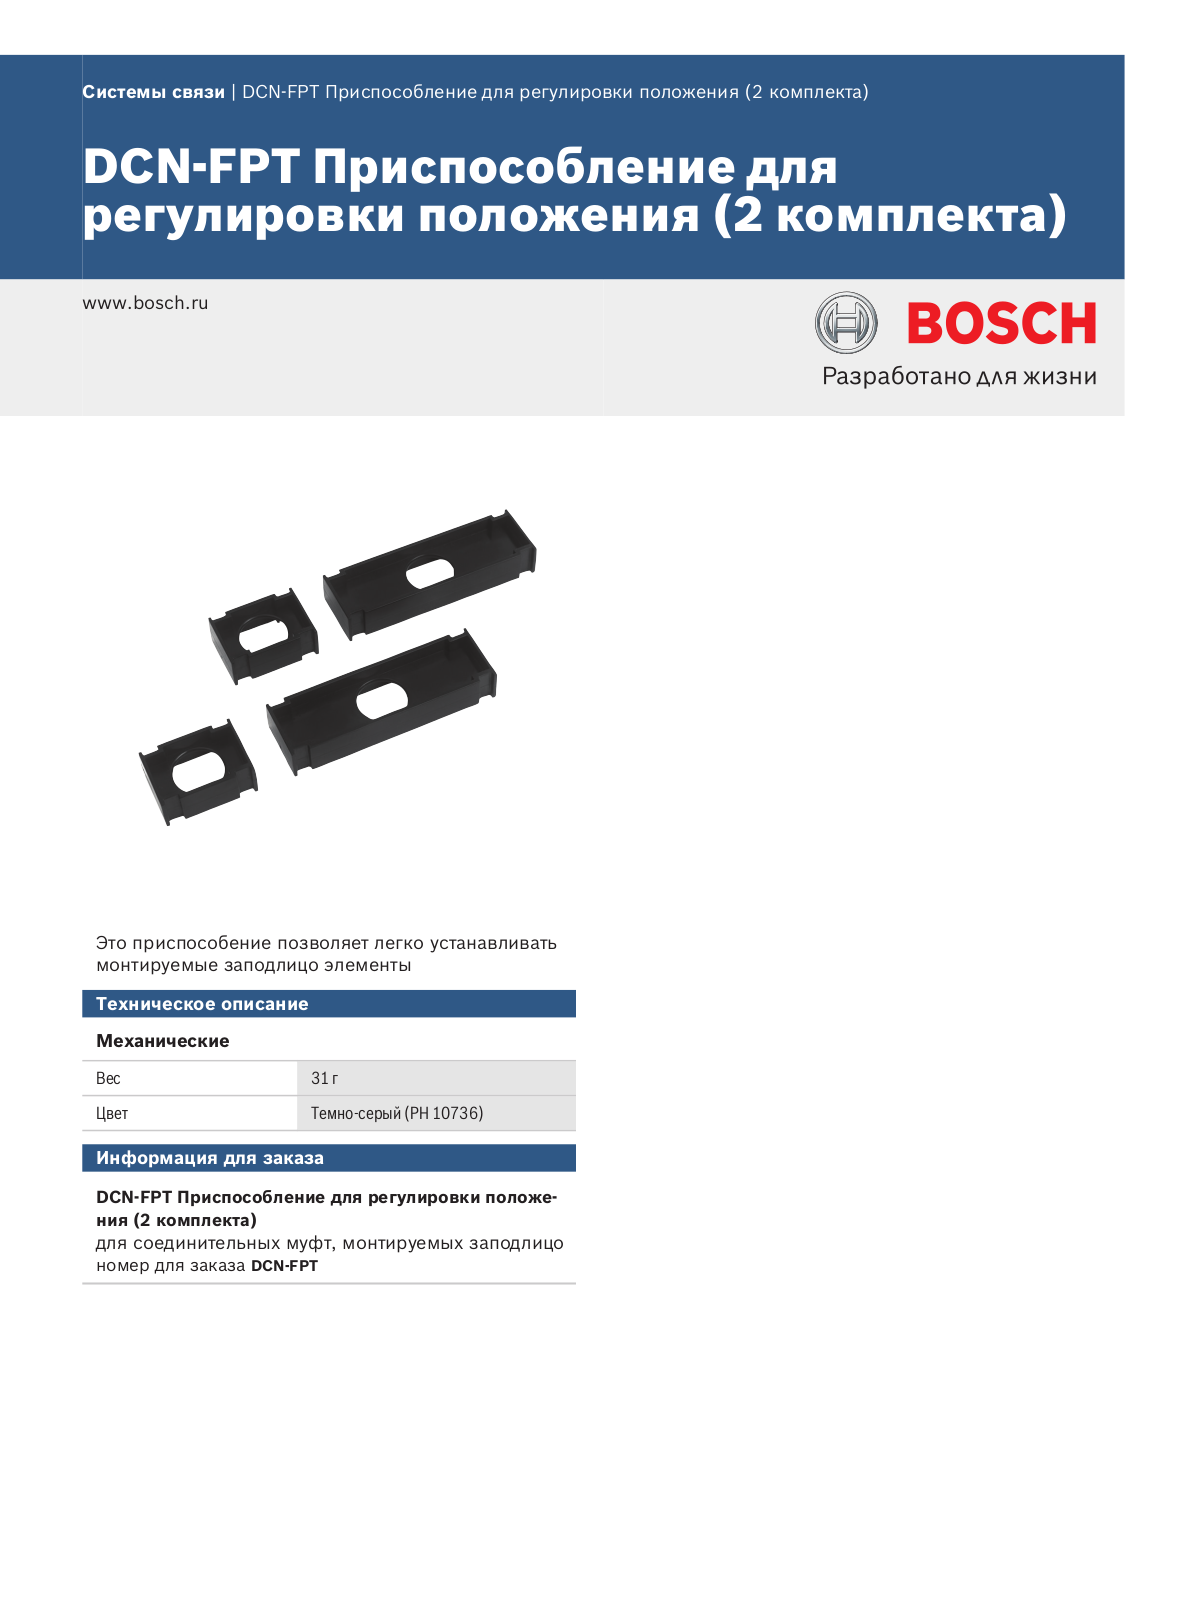 BOSCH DCN-FPT User Manual